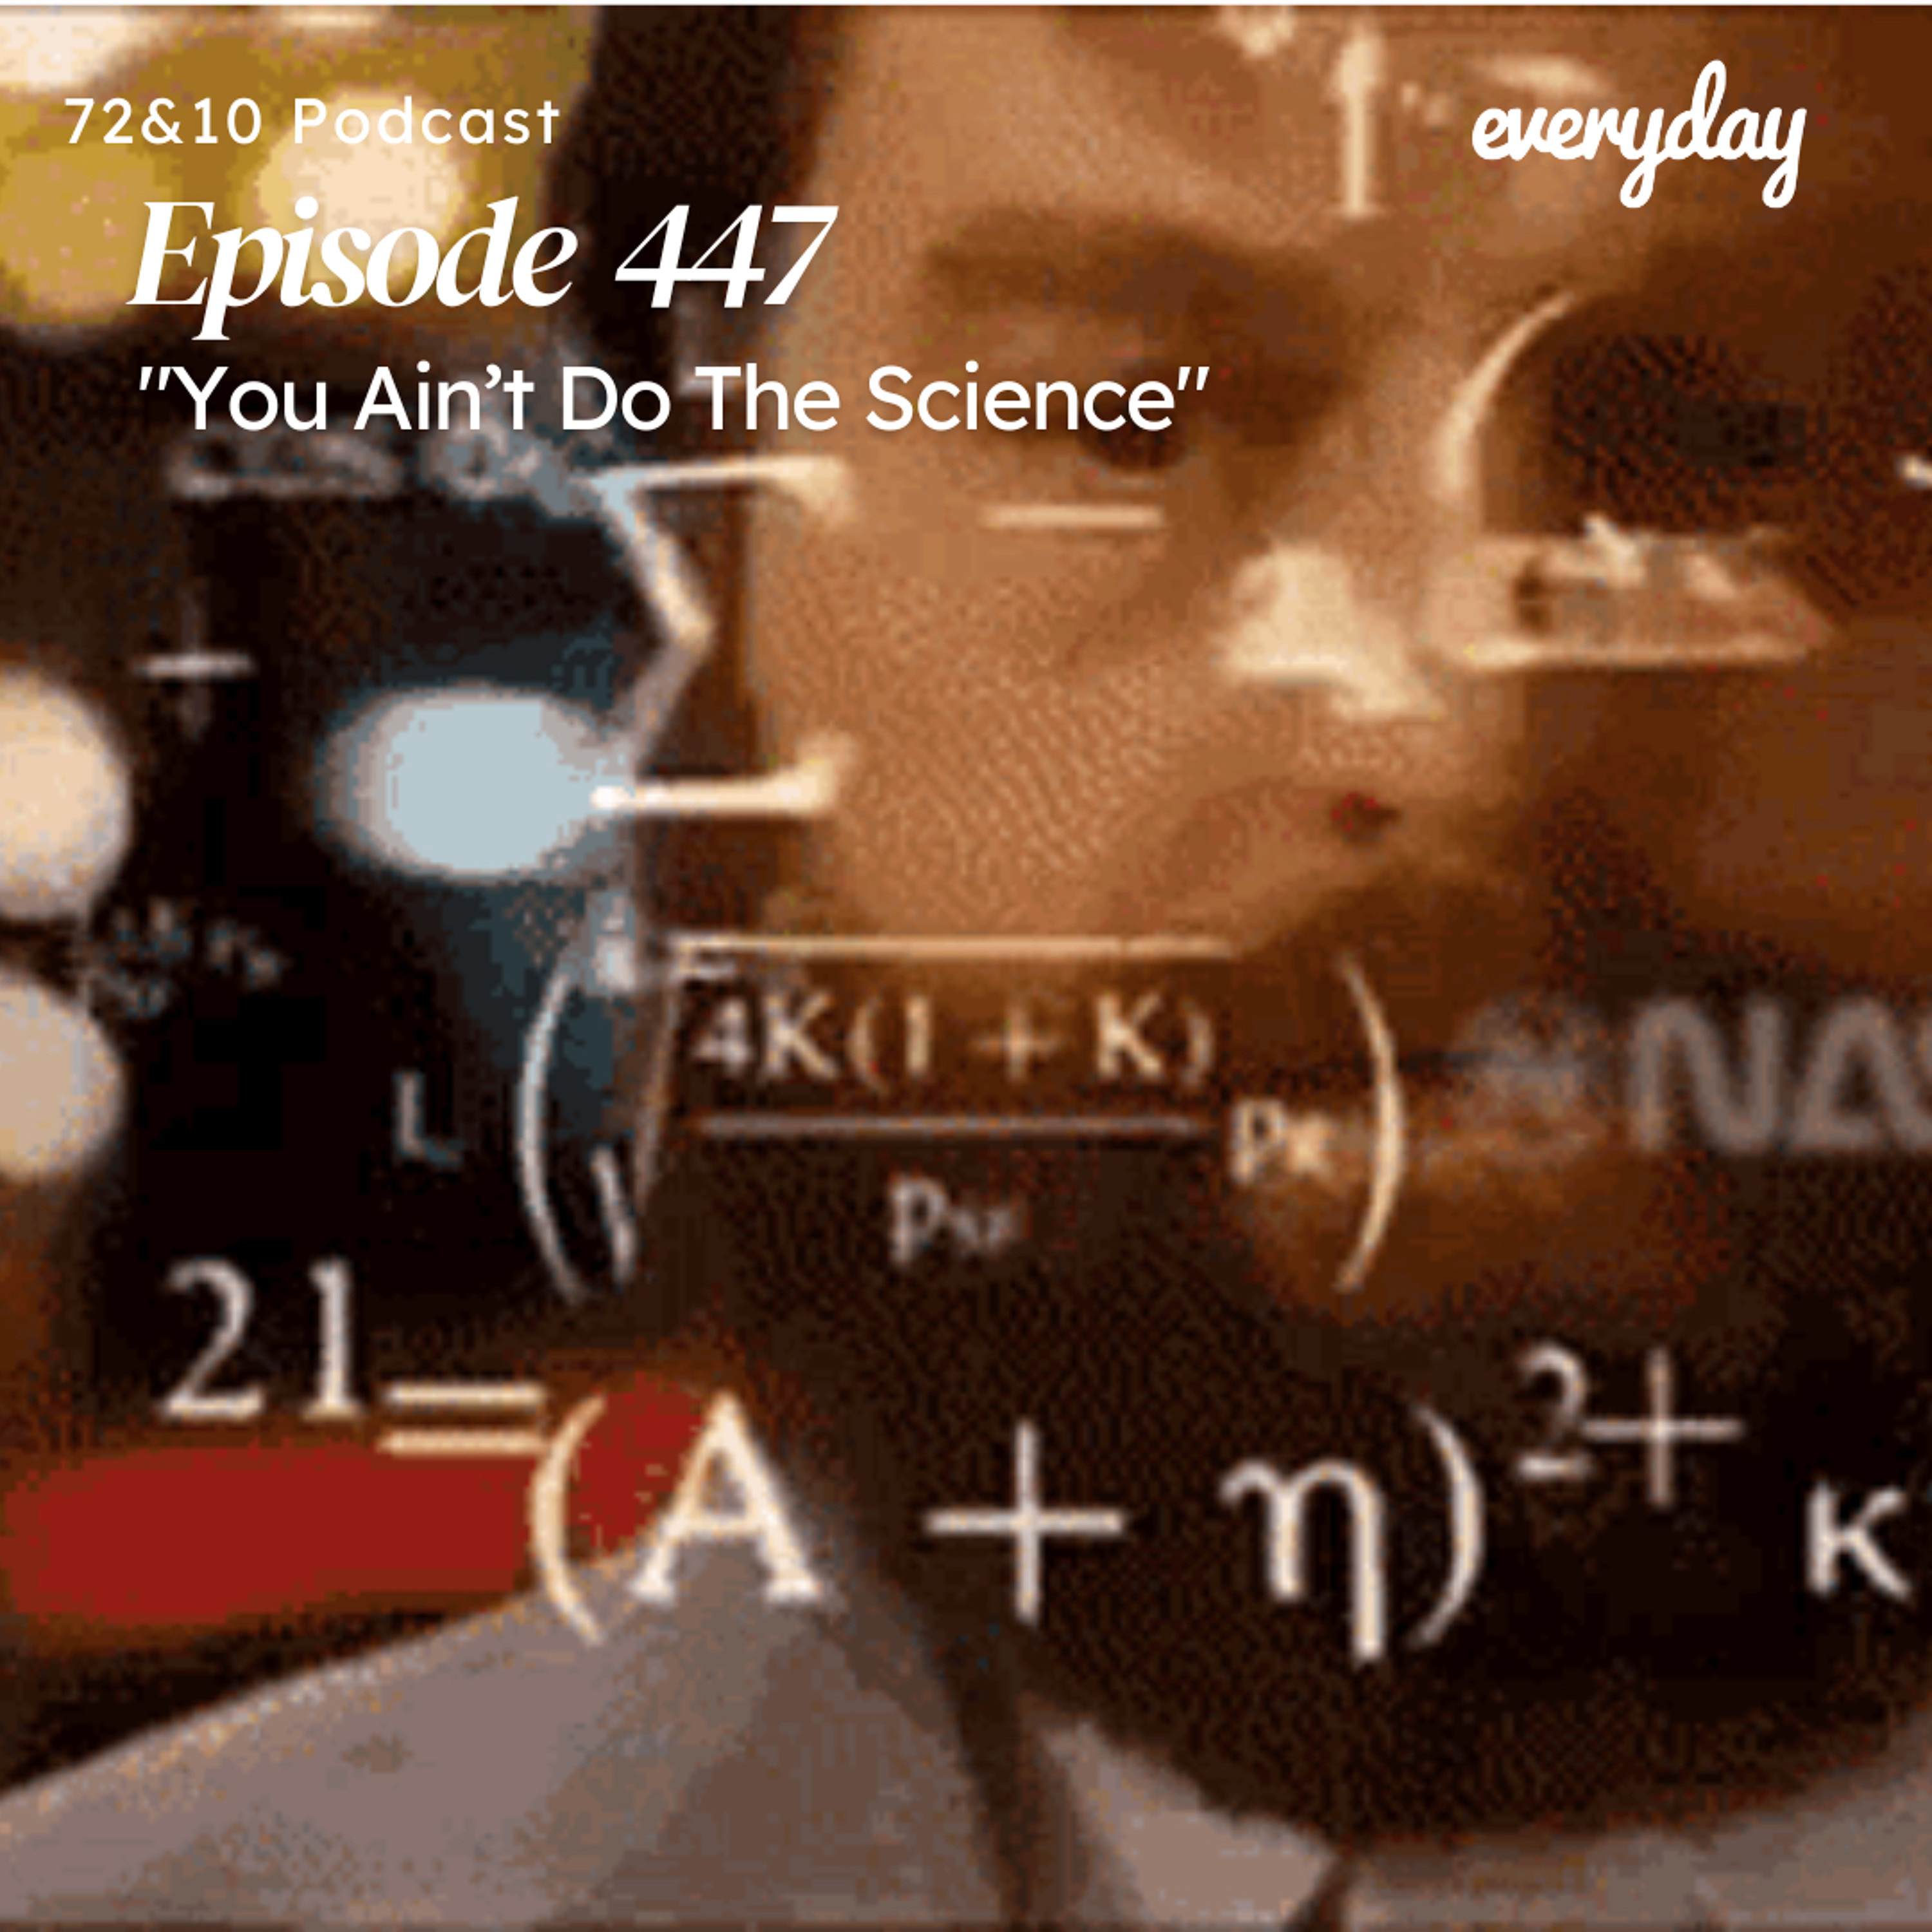 Season 9 Episode 447 ”You Ain’t Do The Science”